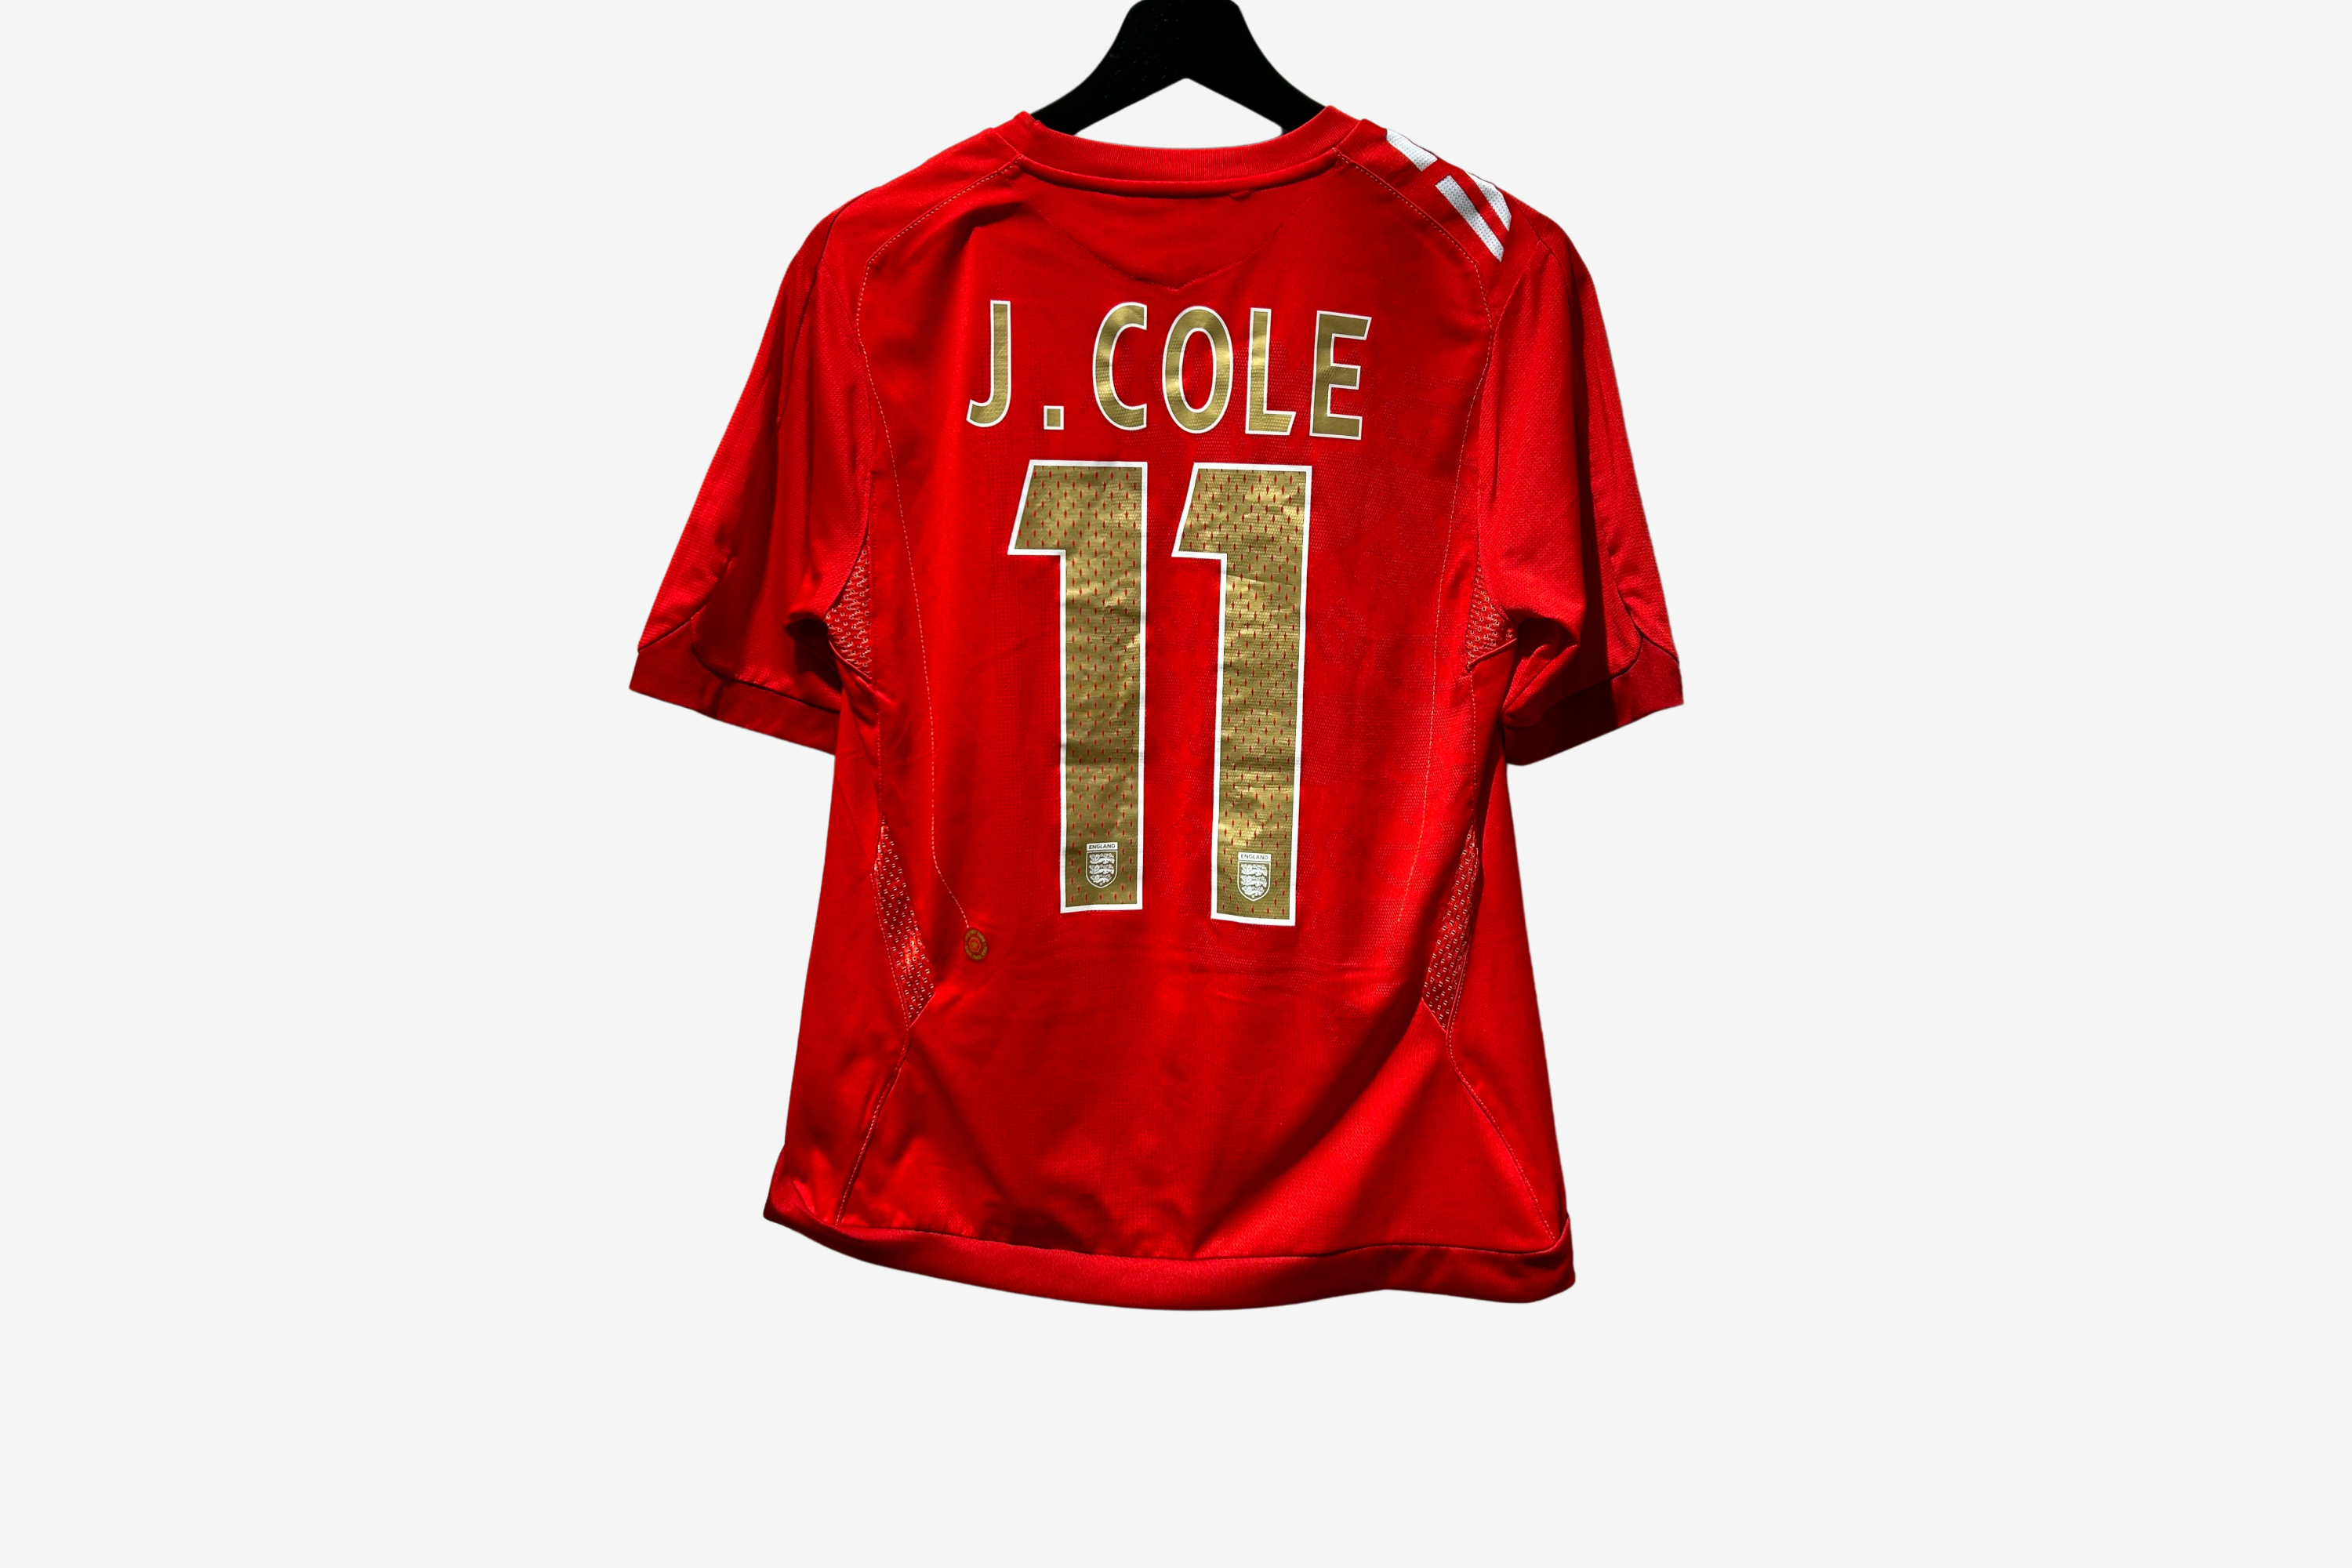 Umbro - England 2006 Away Football Shirt 'J.COLE'